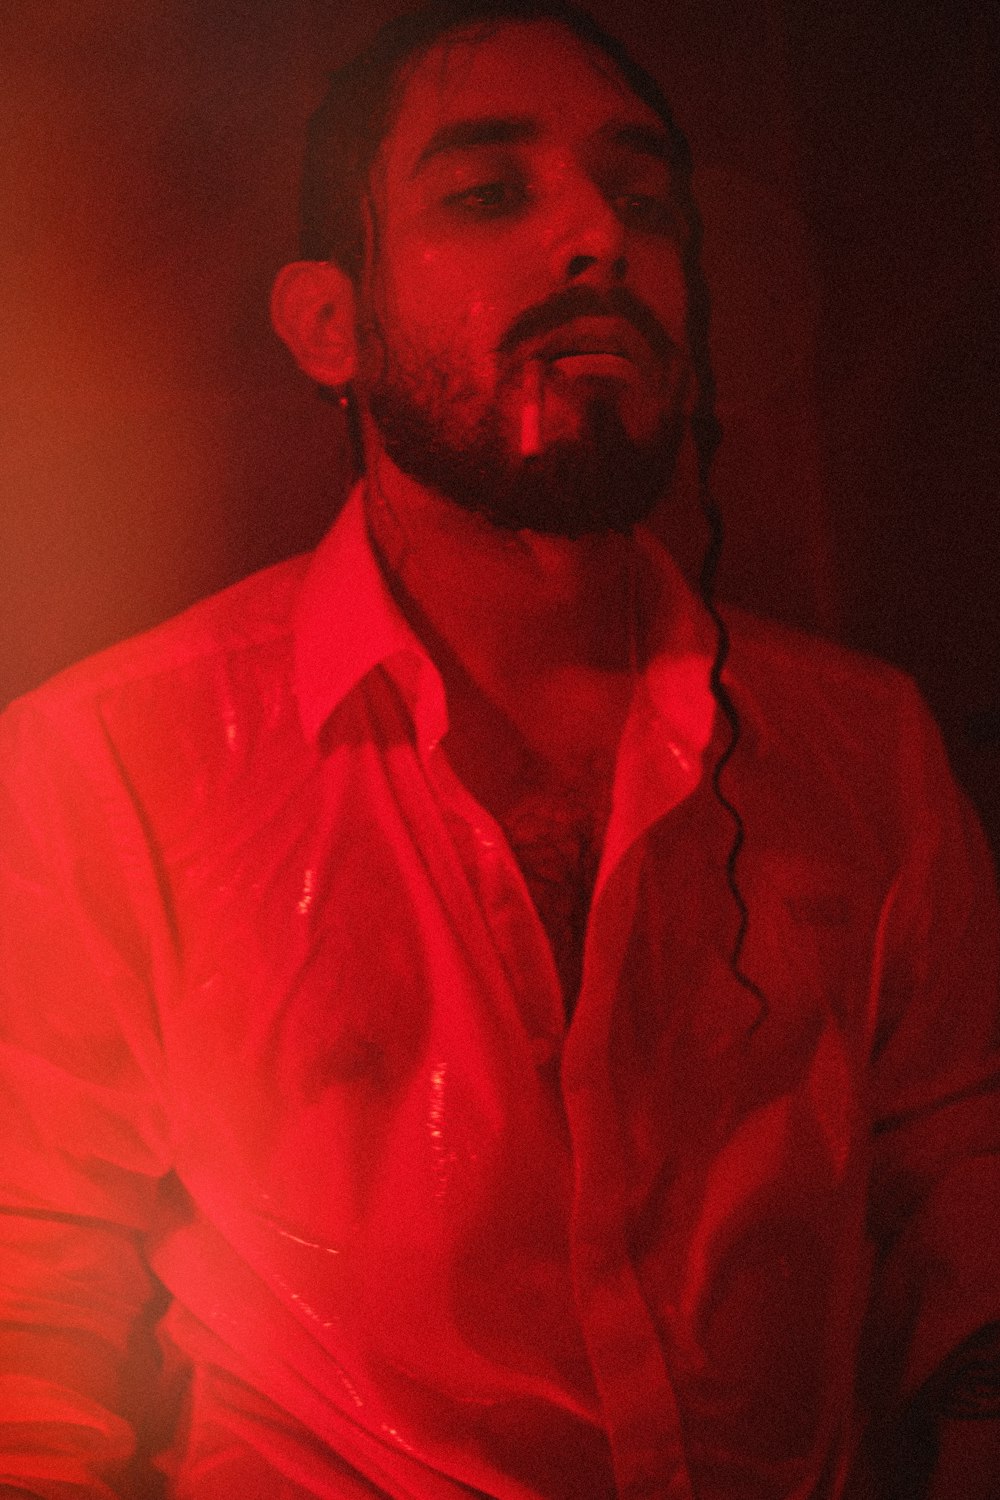 a man with a beard wearing a red shirt